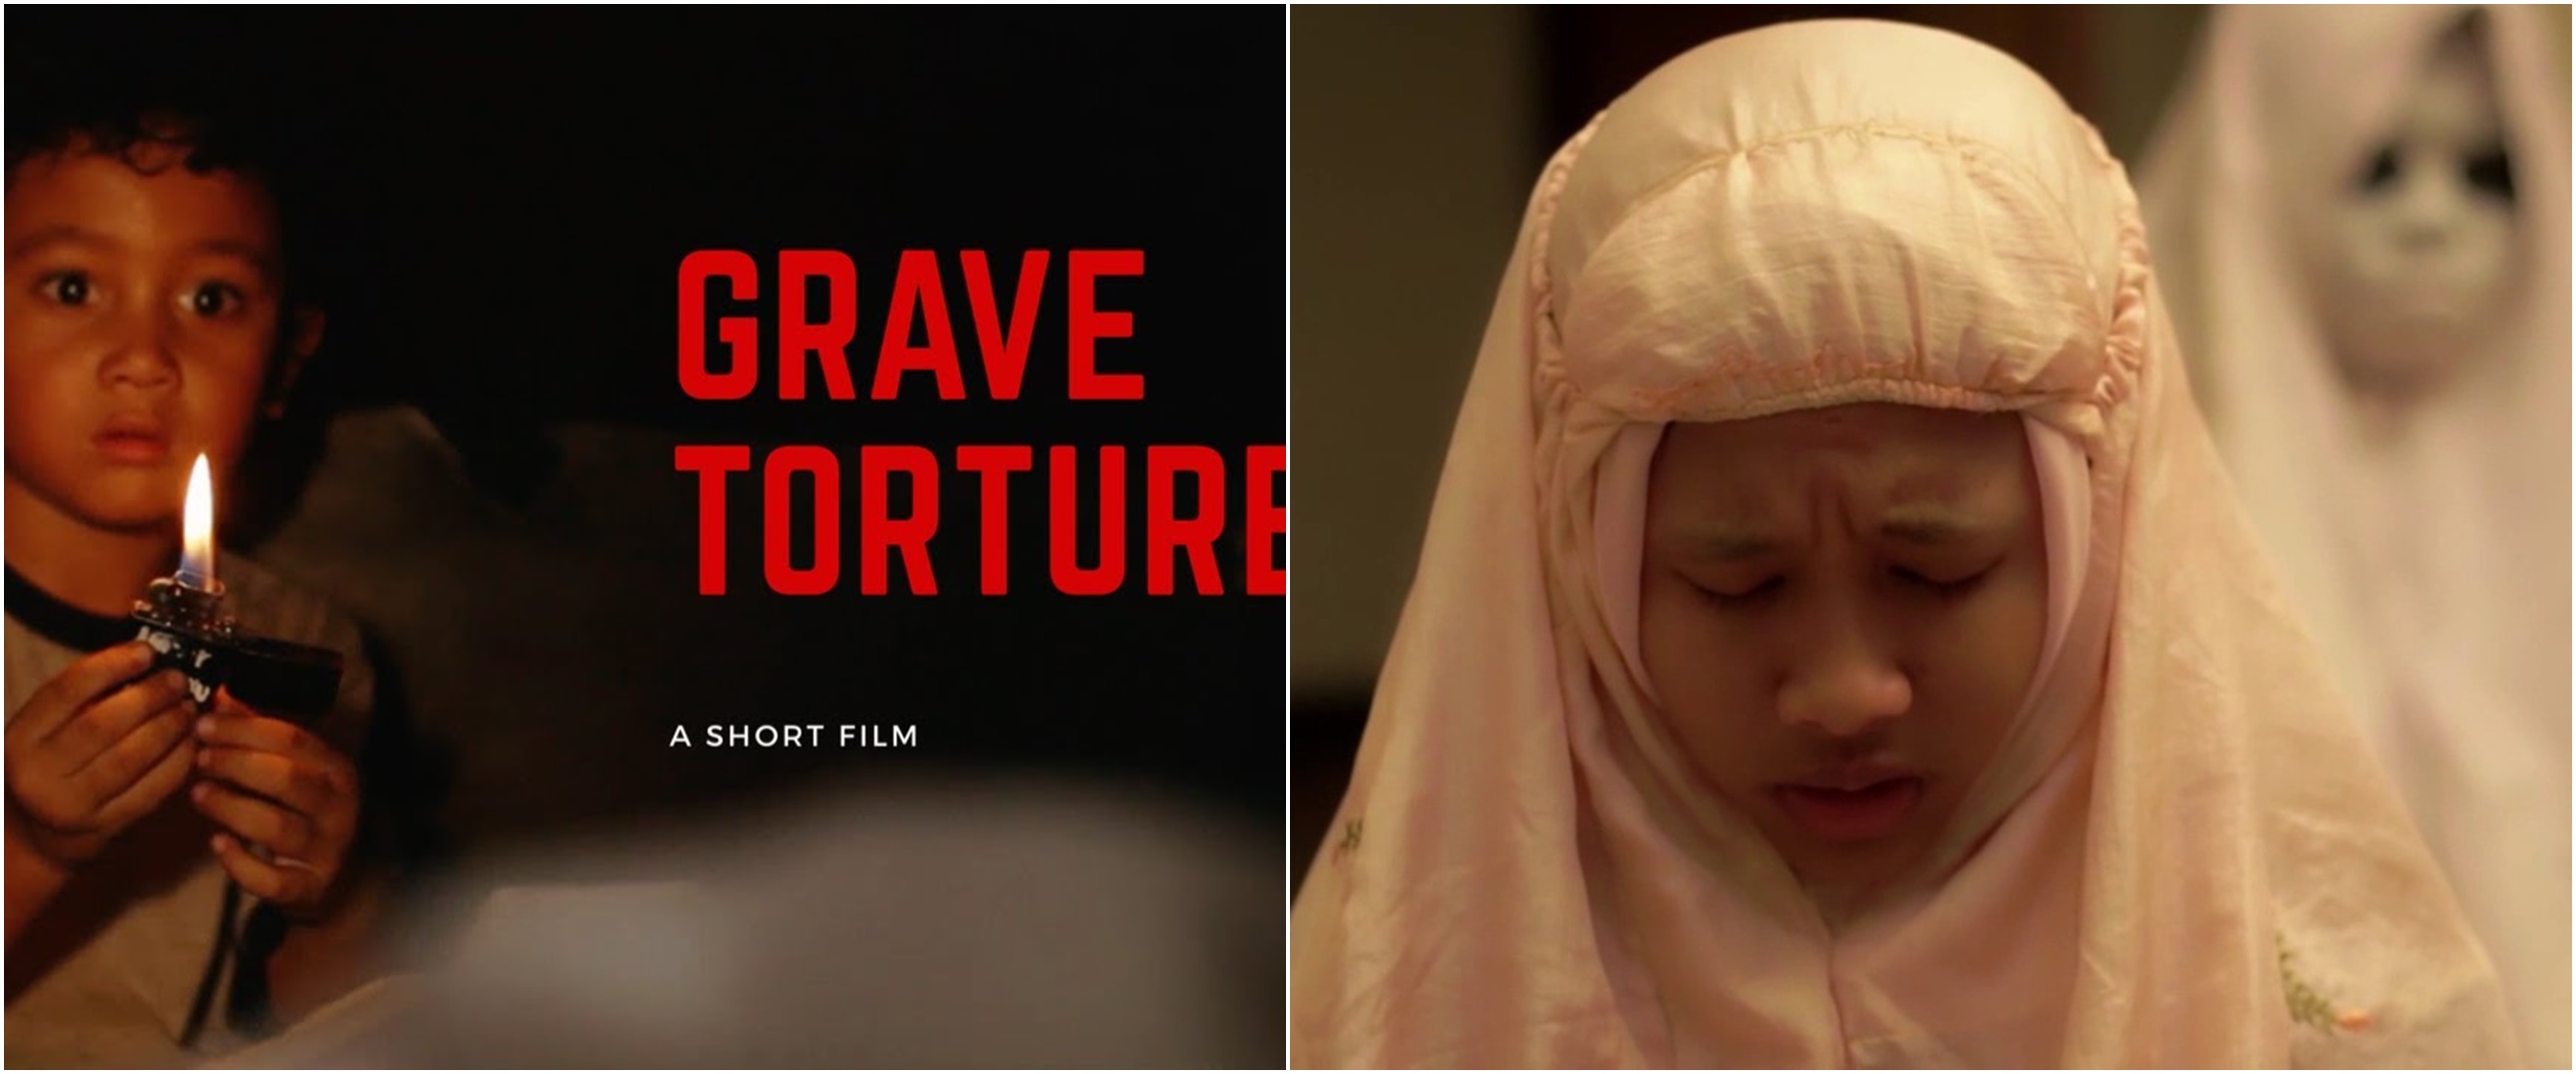 9 Film pendek horor Indonesia di YouTube, ngerinya bikin kepikiran